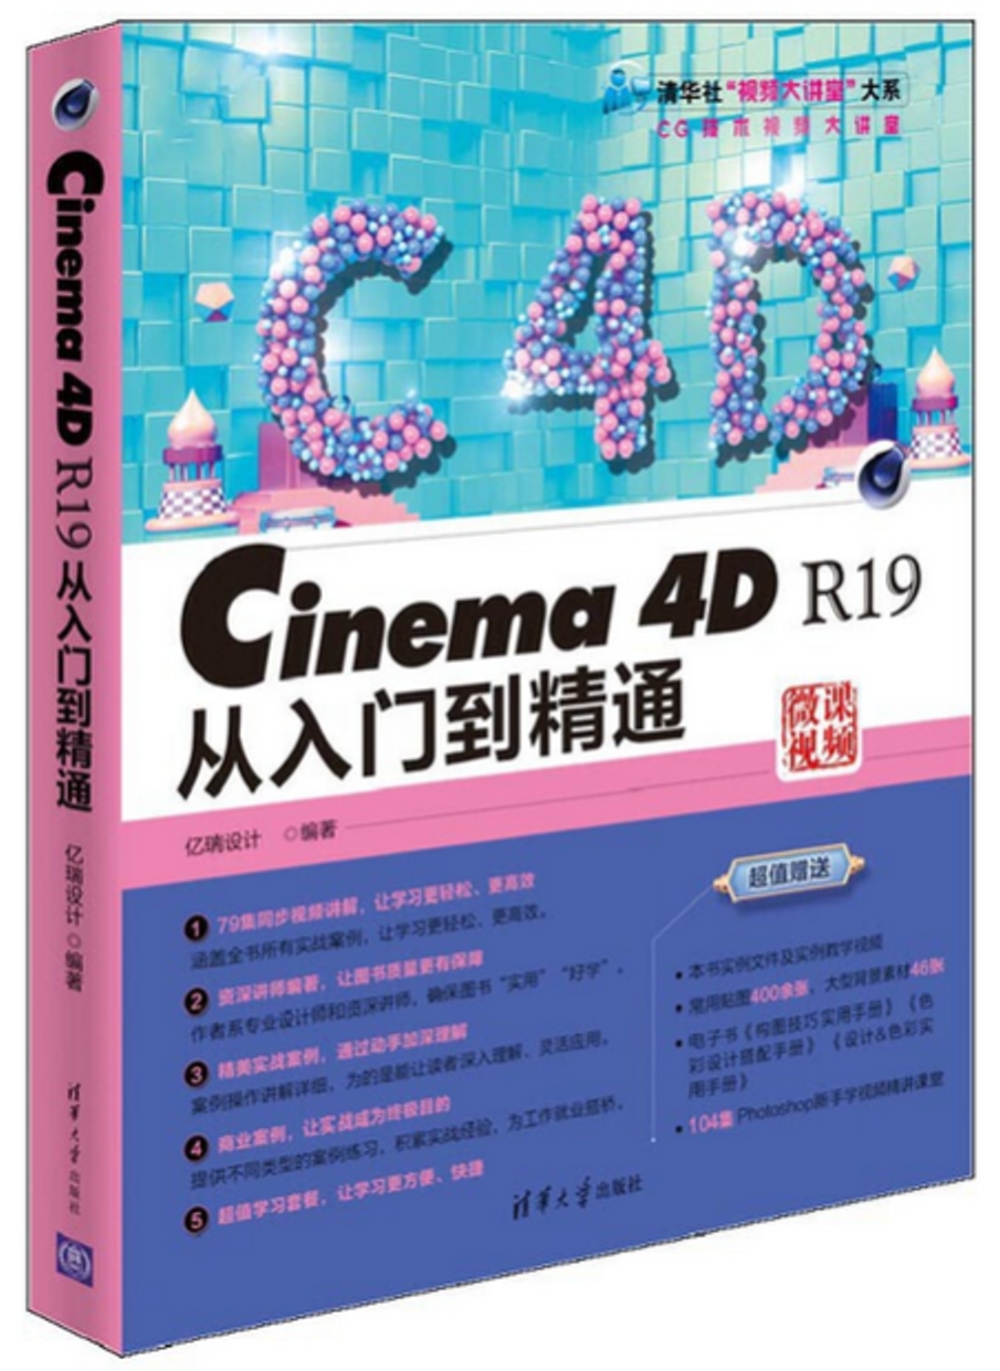 Cinema 4D R19從入門到精通